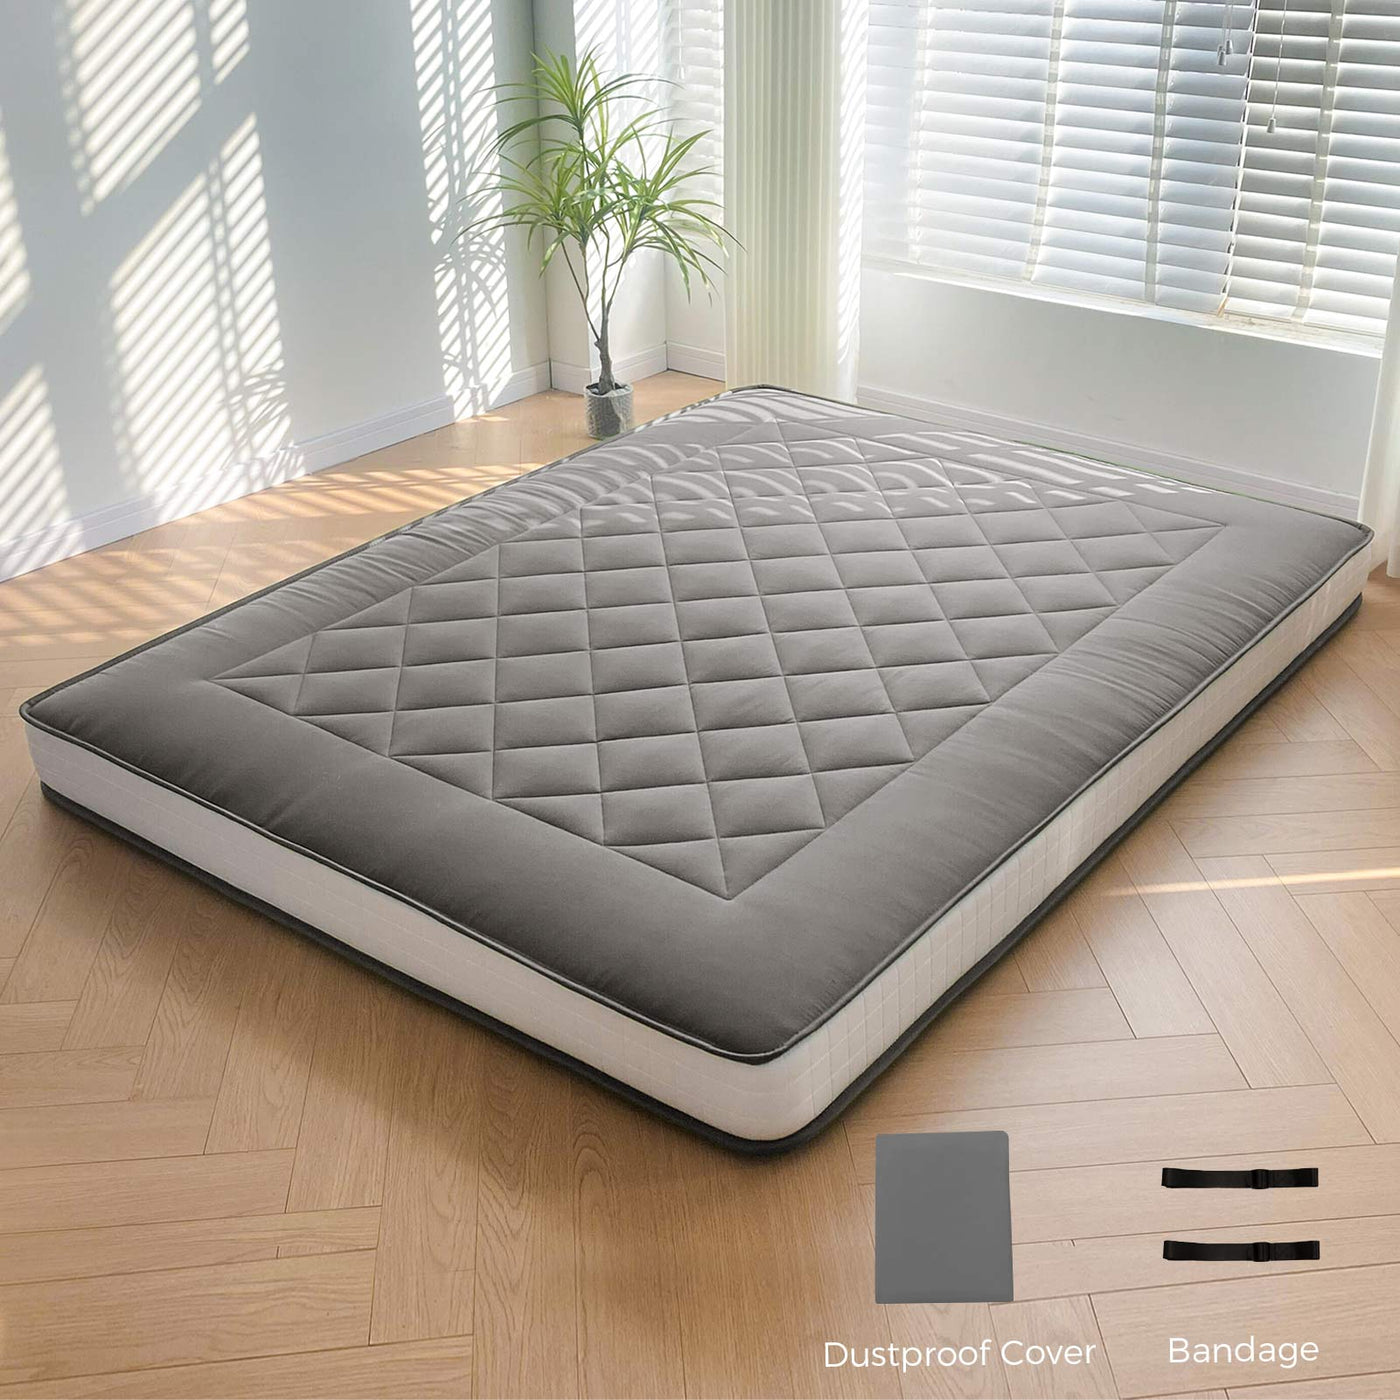 MAXYOYO 6" Extra Thick Japanese Futon Mattress, Stylish Diamond Quilting Floor Bed For Bedroom, Dark Grey